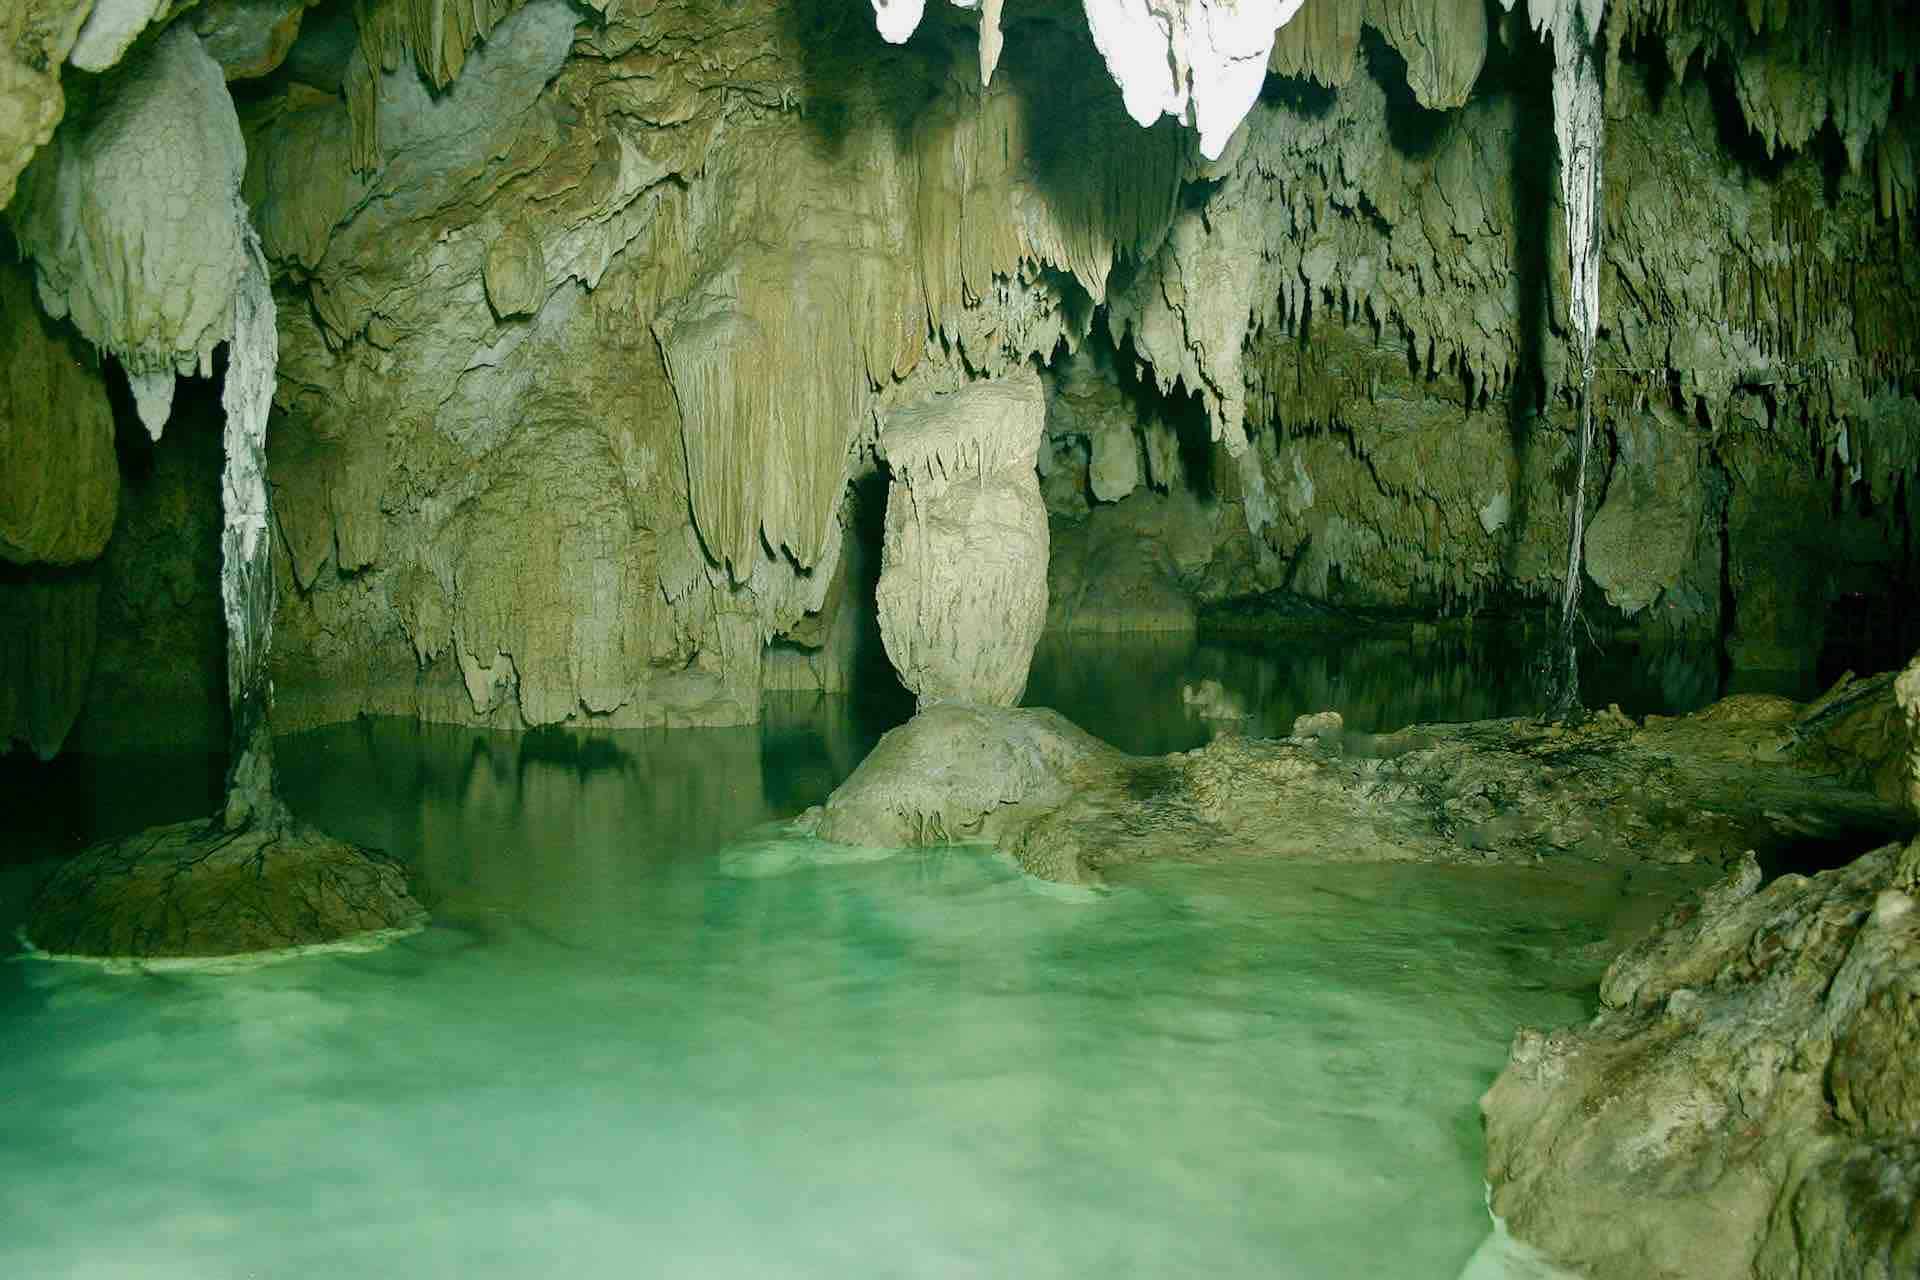 Cenote Riviera Maya sink hole jungle Mexico cave system